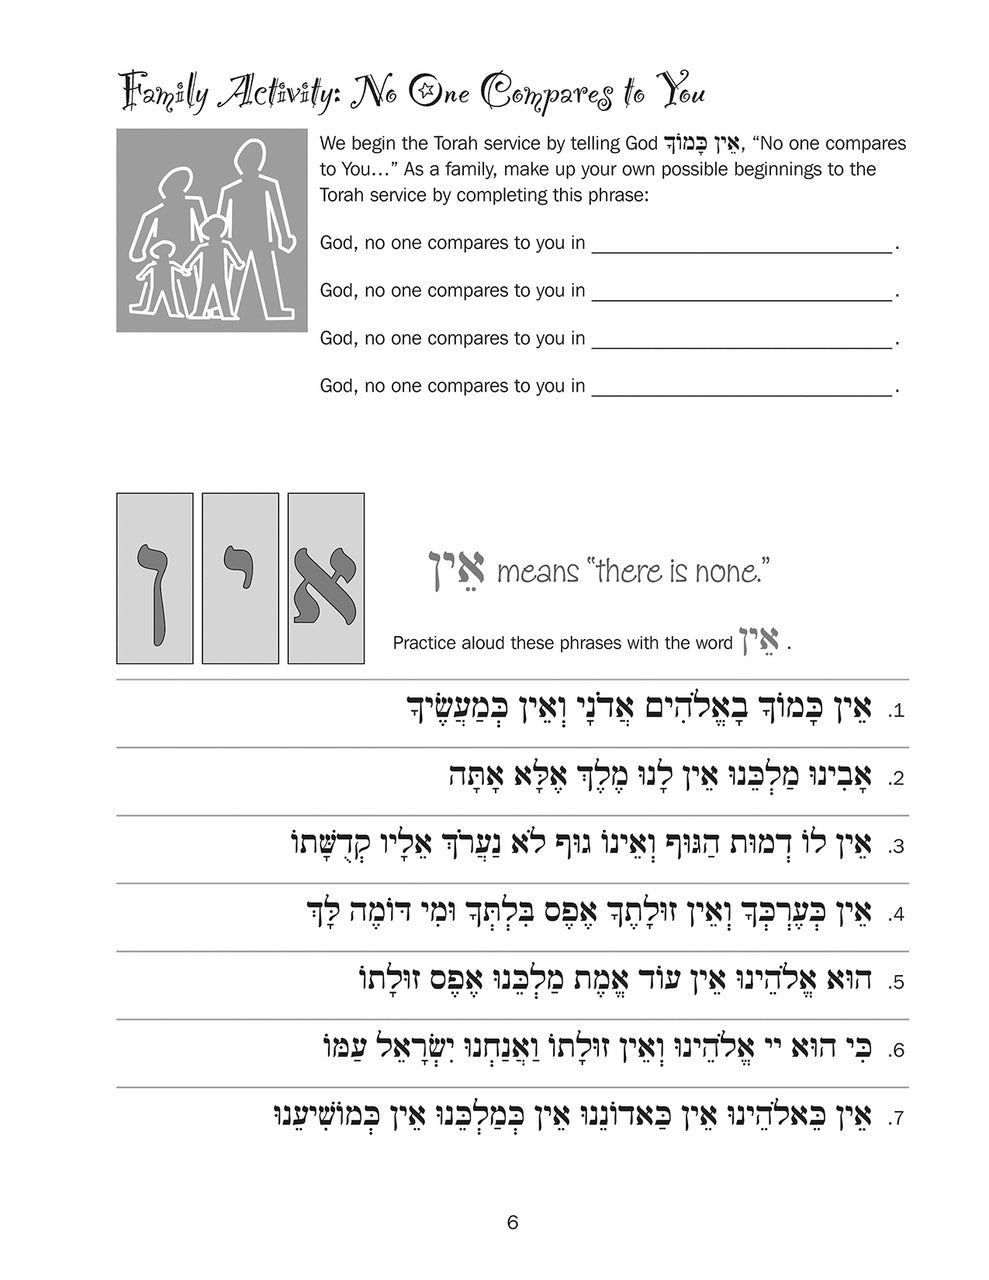 S'fatai Tiftah: Siddur Mastery & Meaning Volume 3 Home Workbook